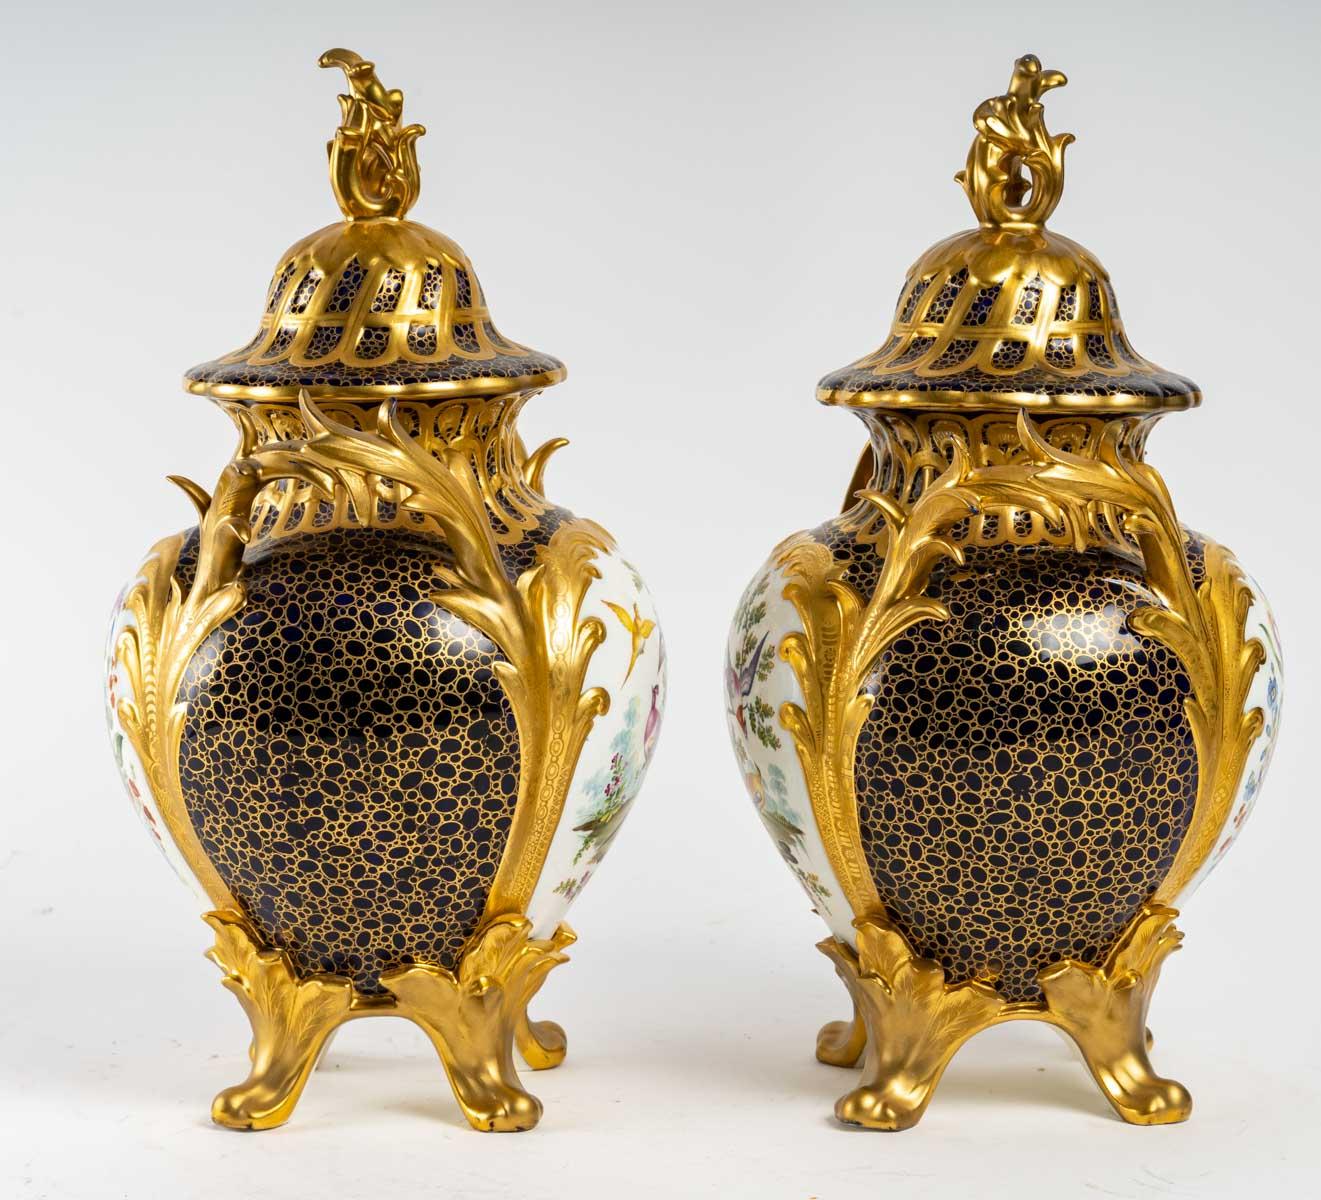 European Pair of Gilt and Enamelled Porcelain Covered Vases